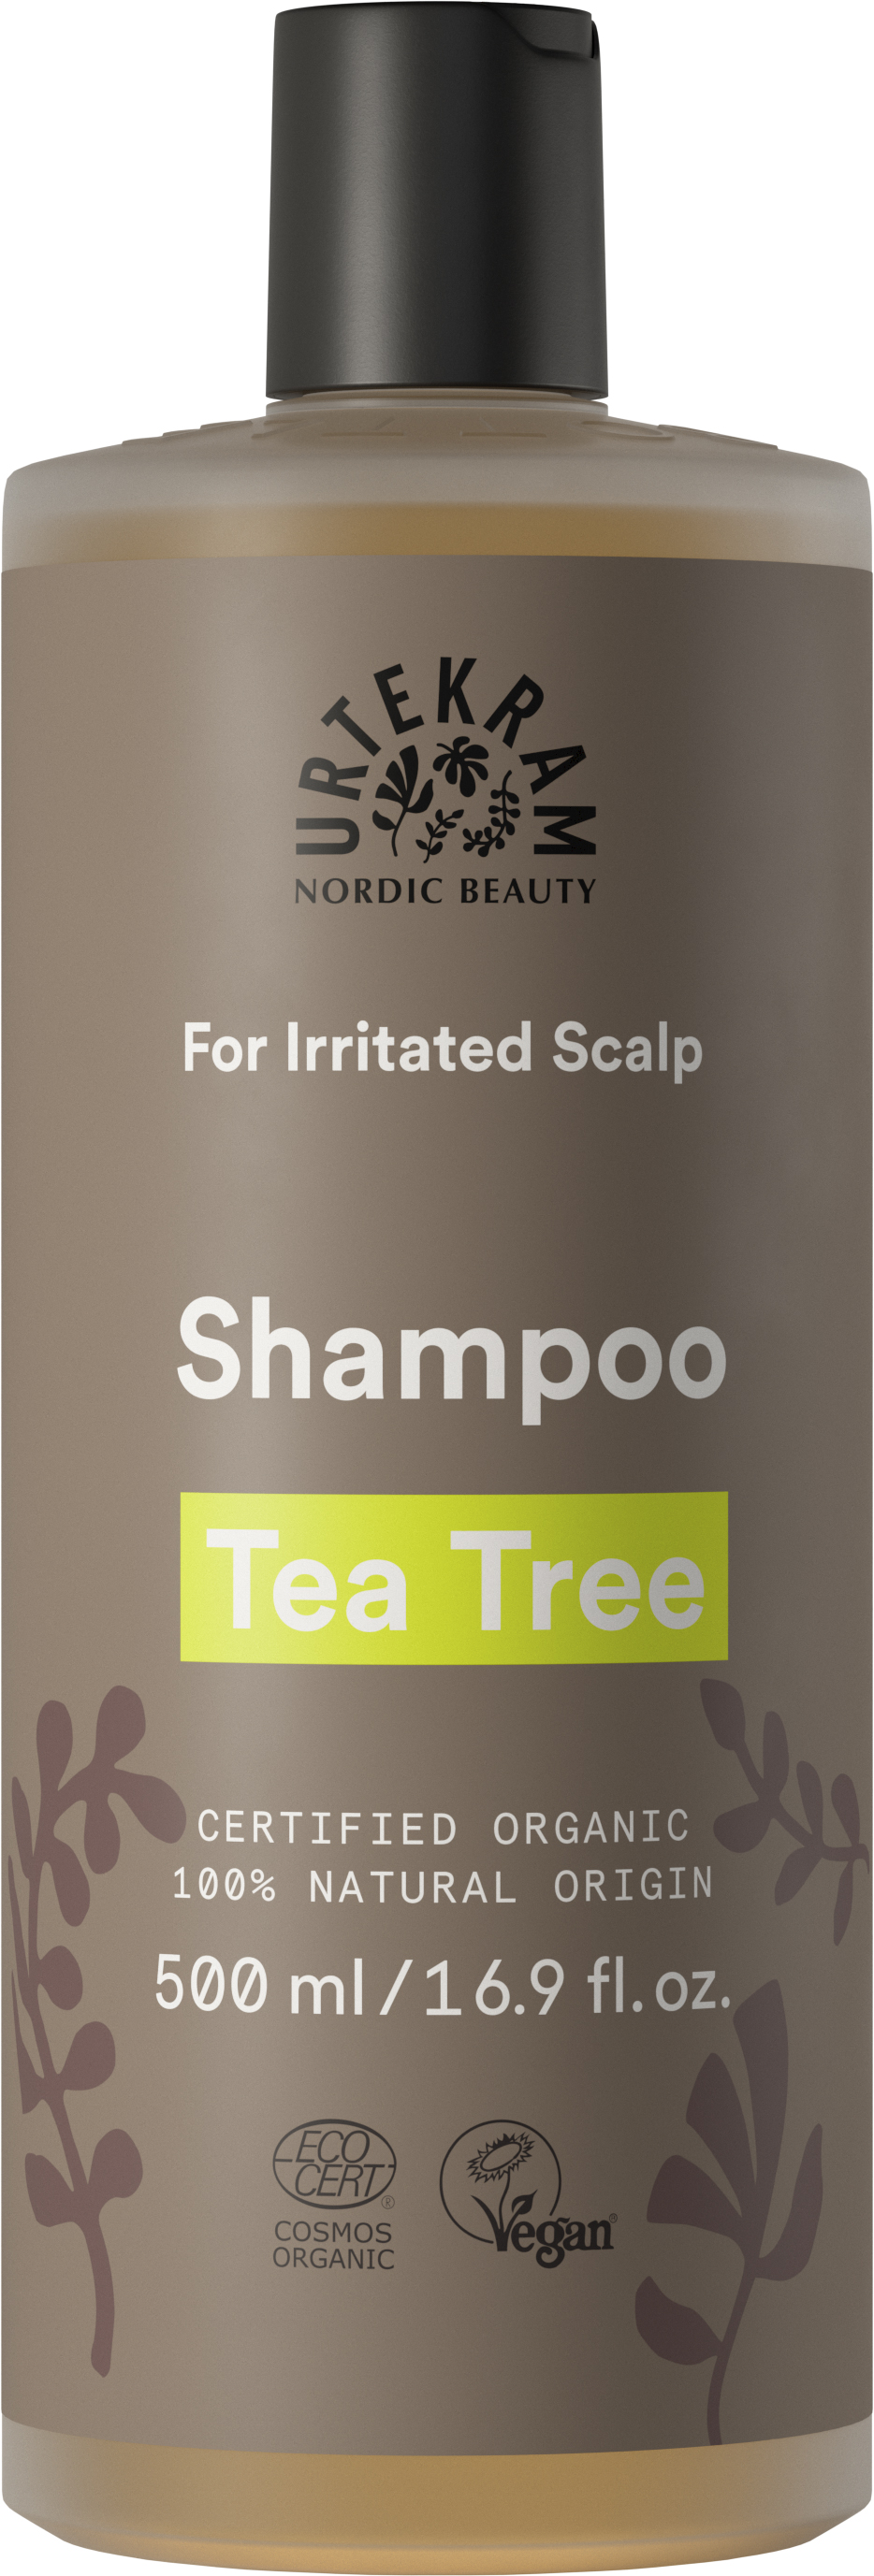 Urtekram Tea Tree Shampoo | Teebaum Shampoo | für gereizte Kopfhaut